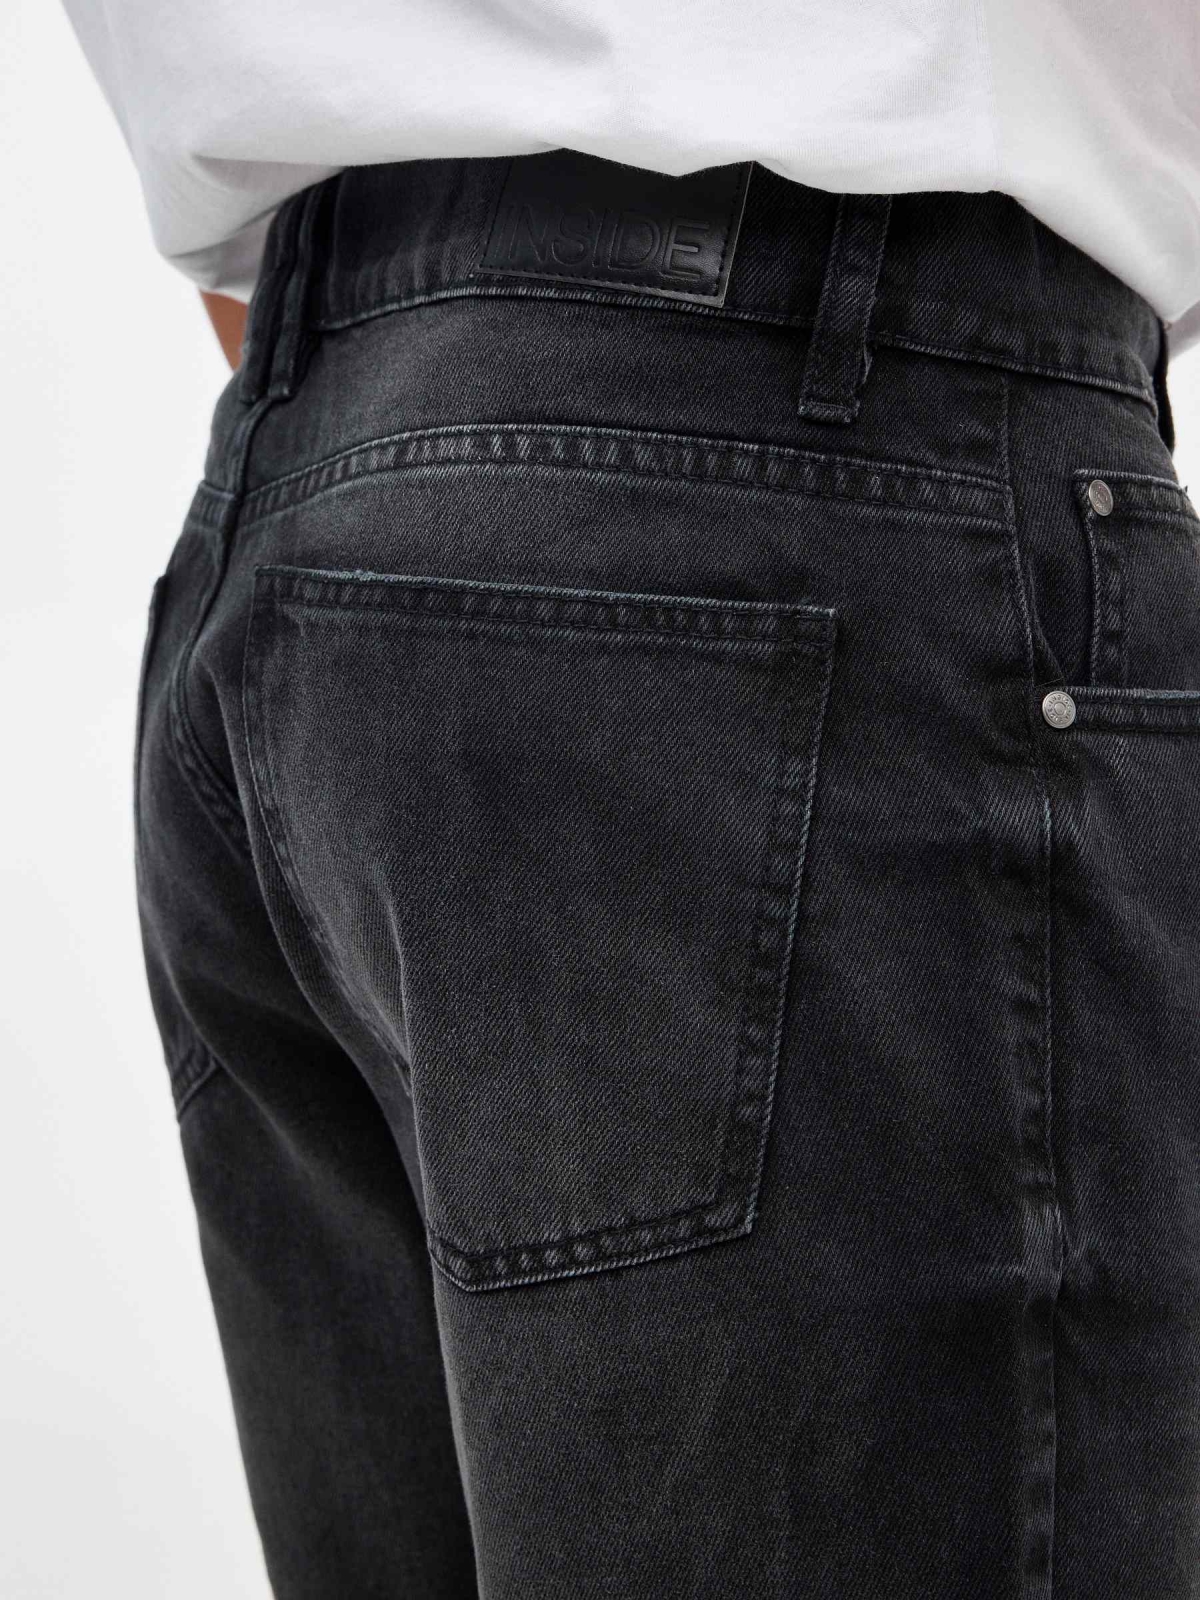 Regular black denim bermuda shorts black detail view